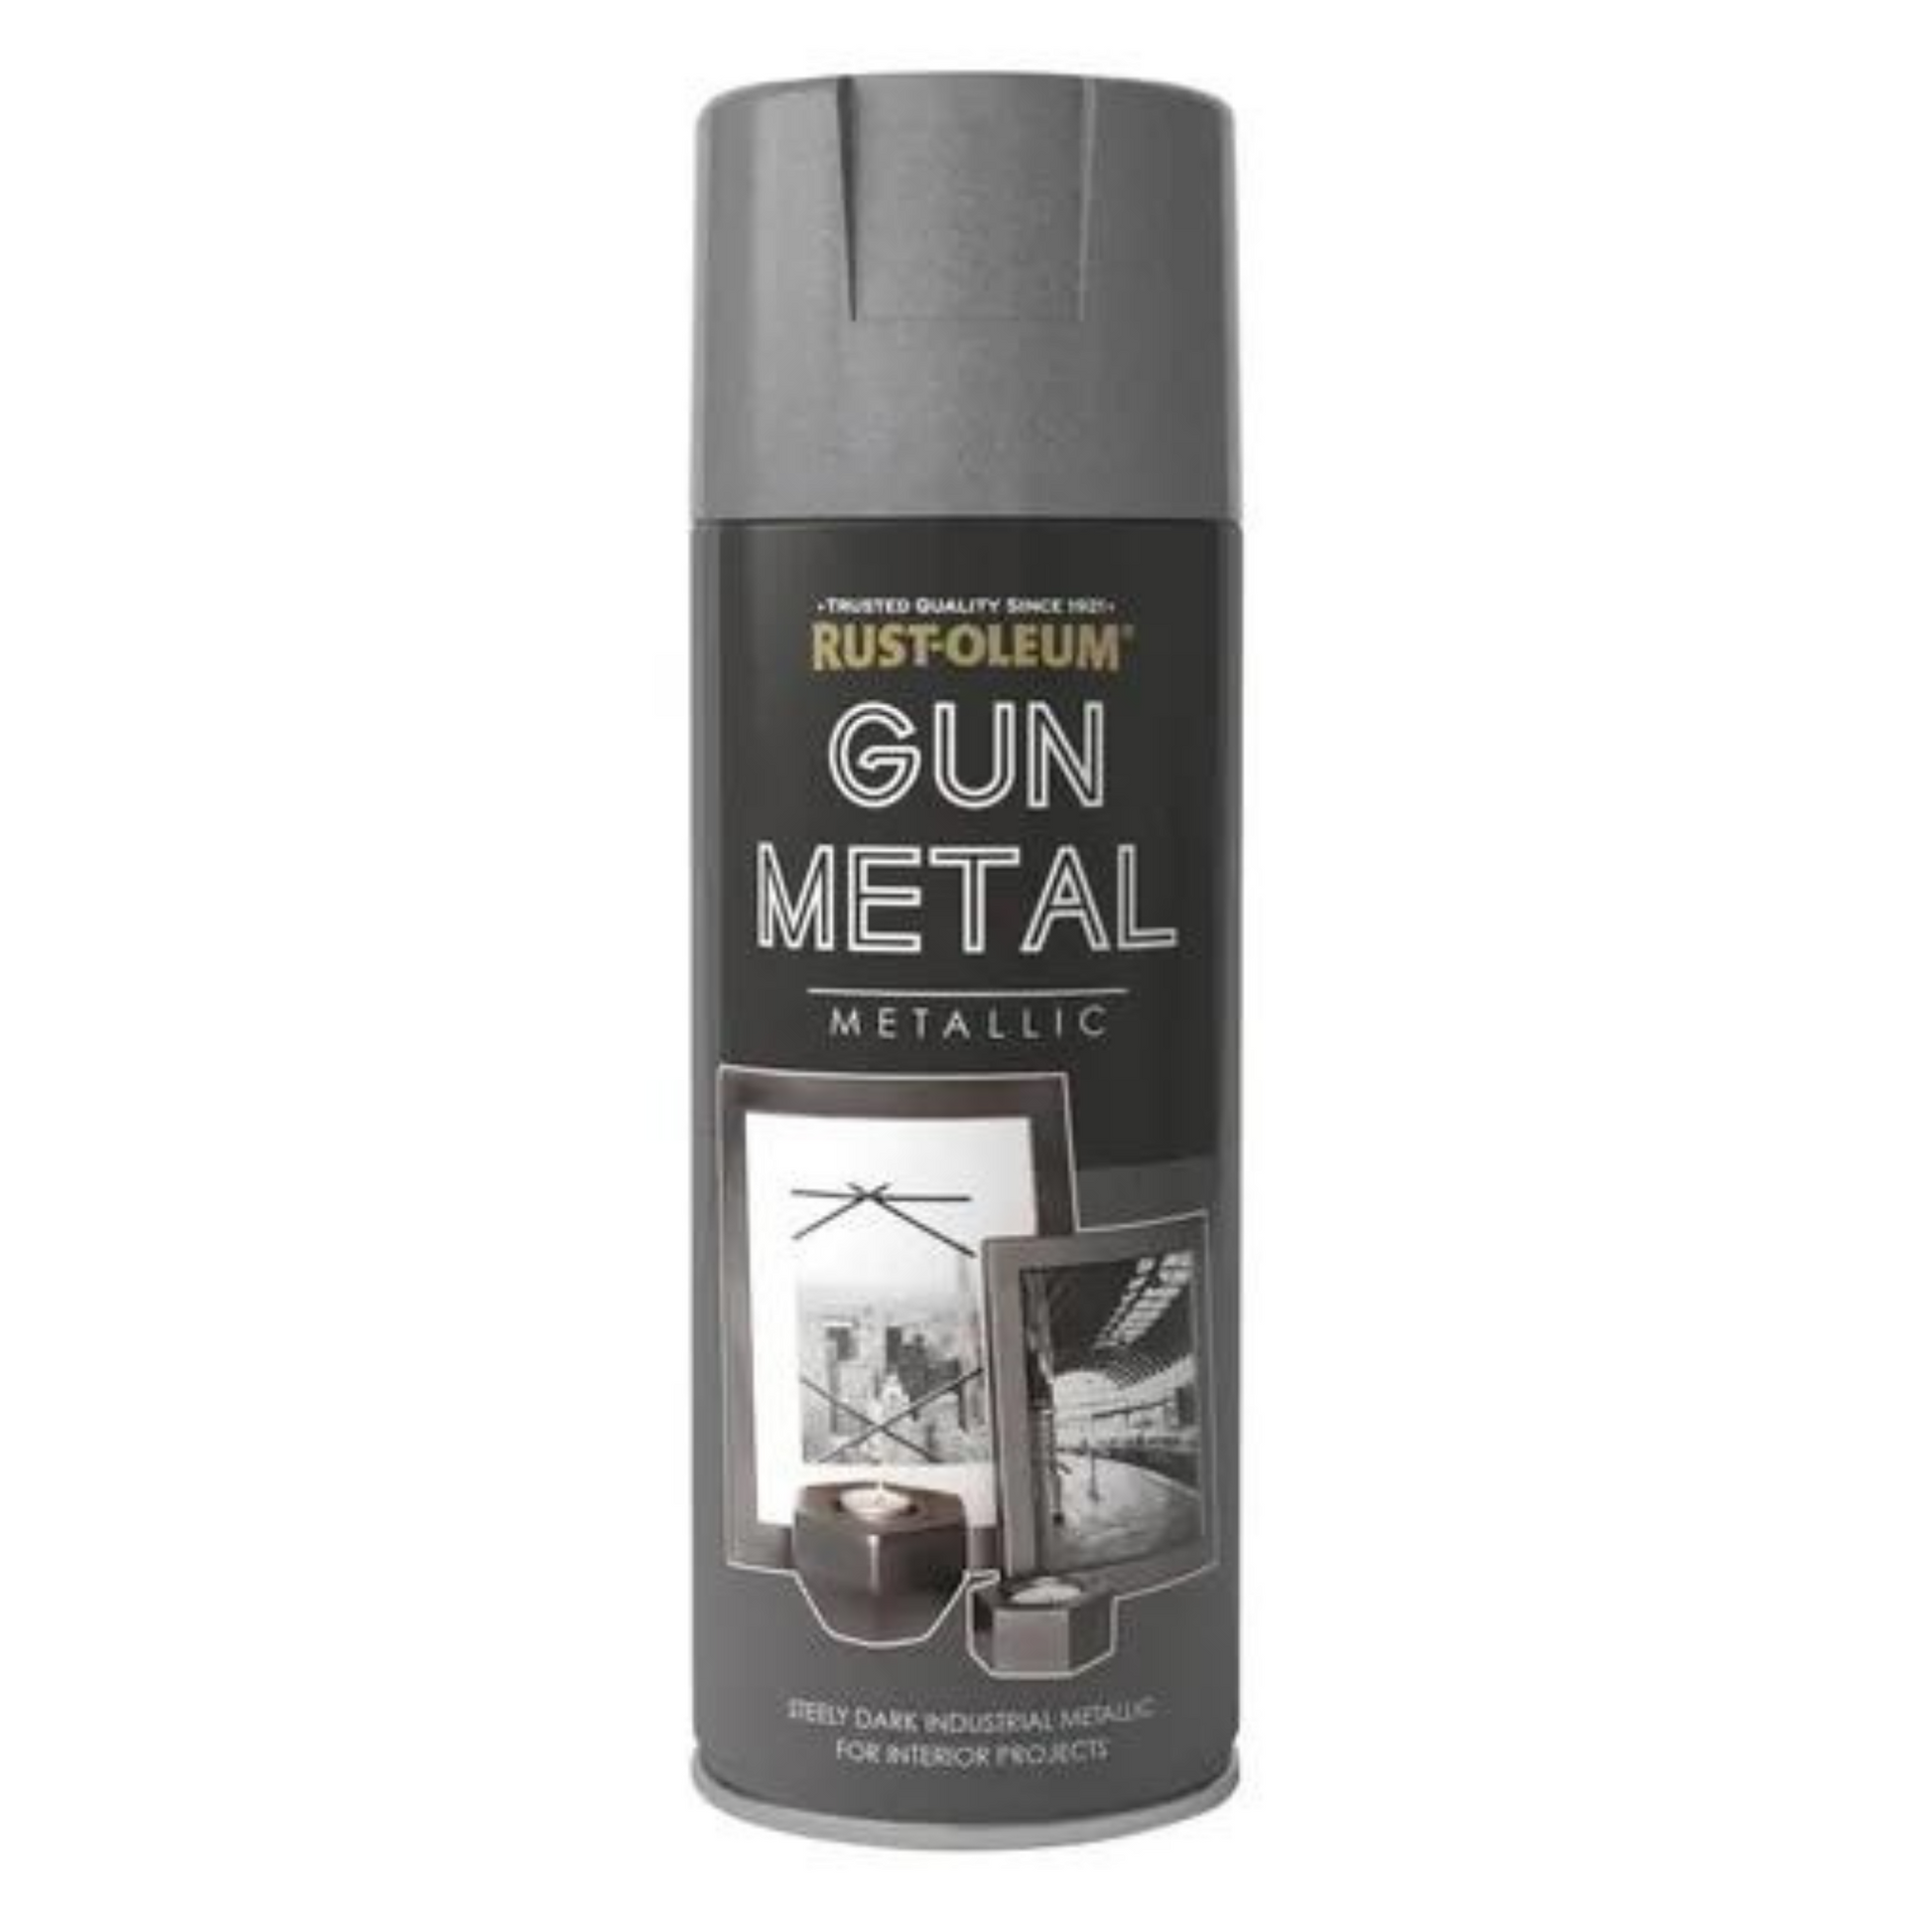 Rustoleum metallic spray gun metal